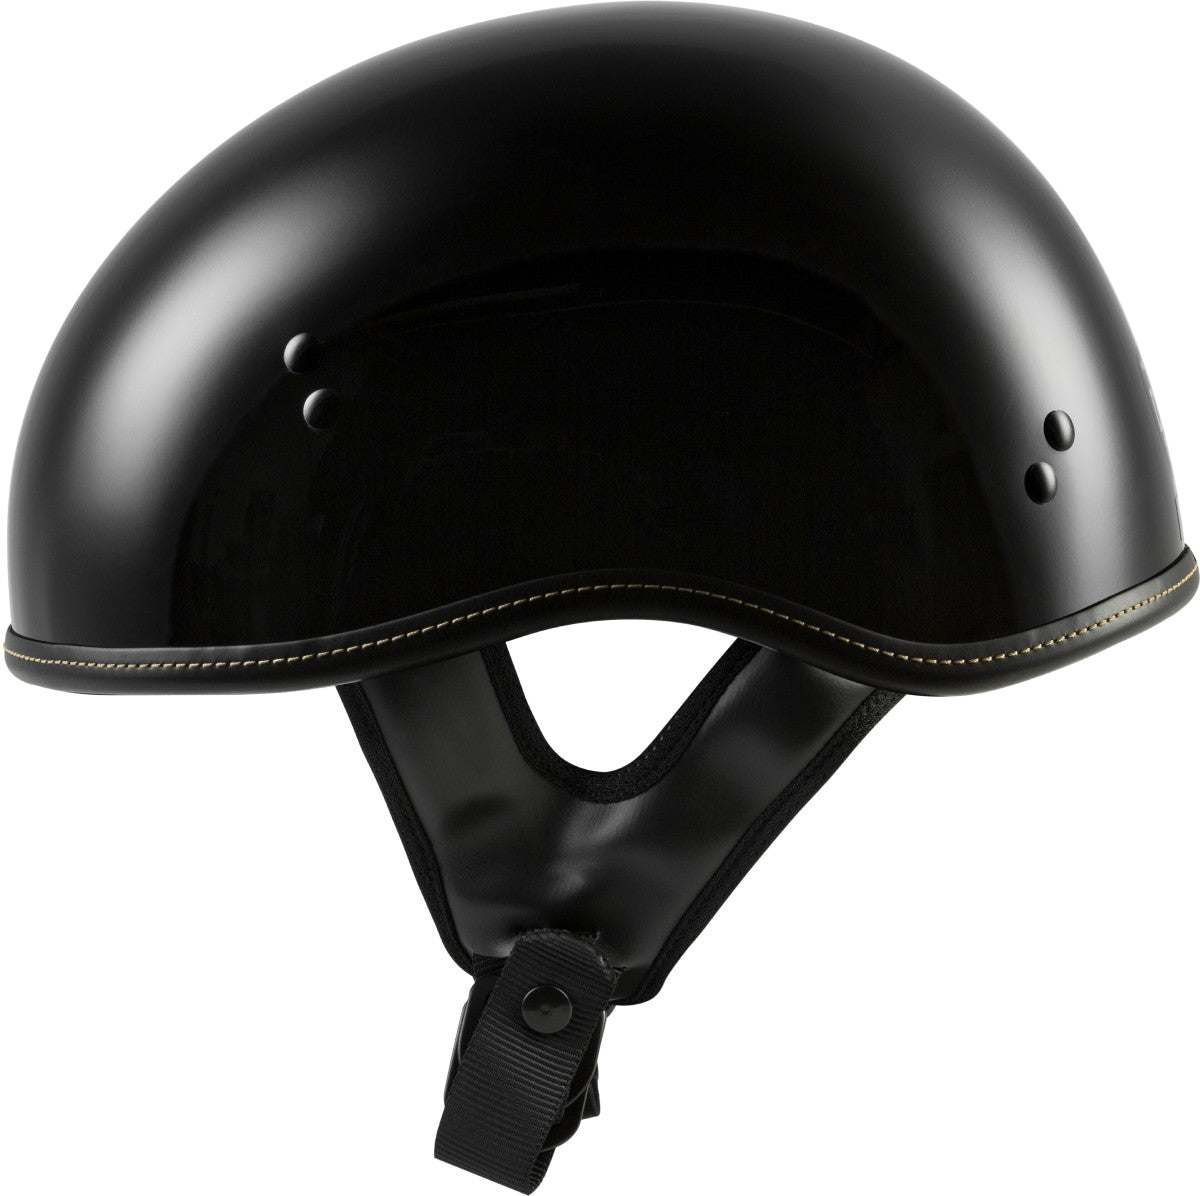 Highway 21.357 Solid Gloss Black Half Helmet